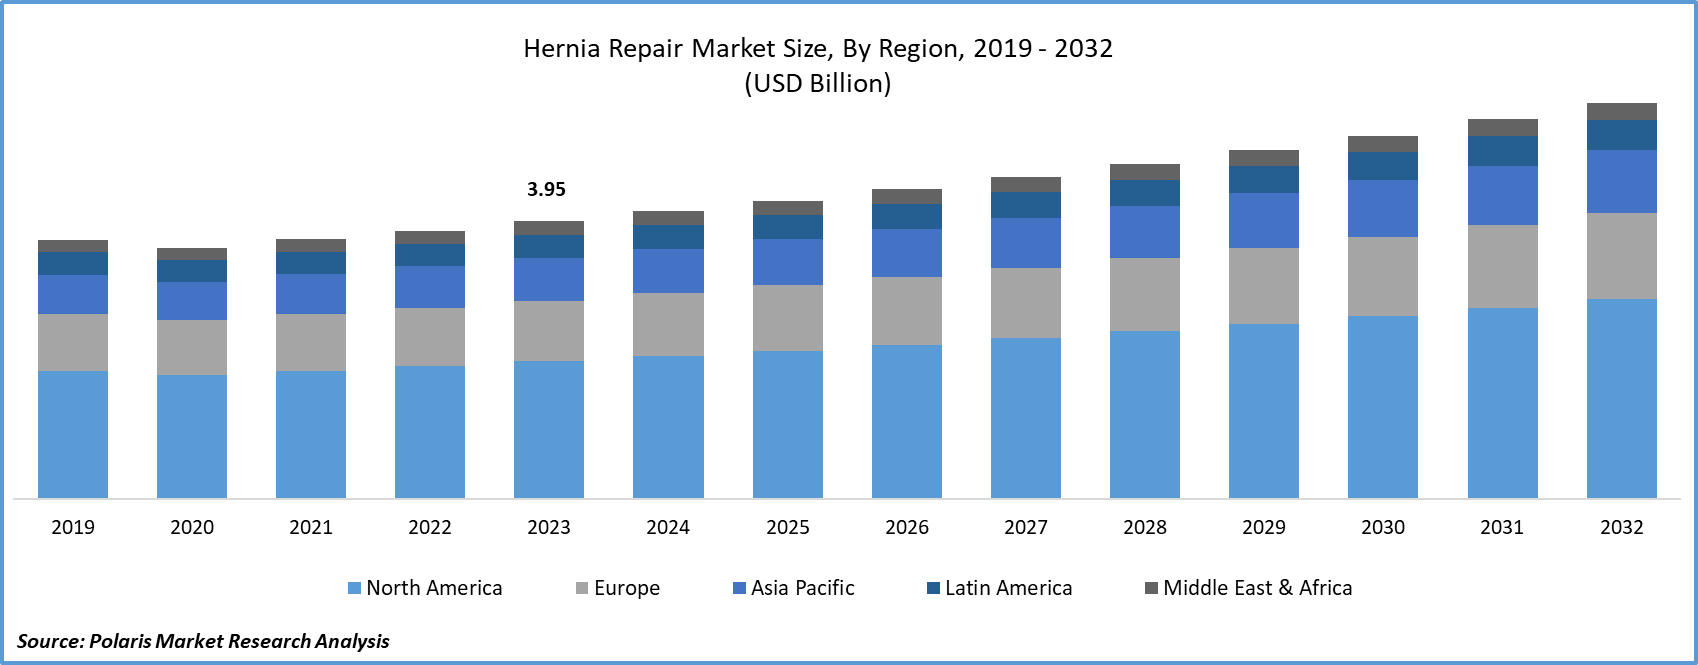 Hernia Repair Market Size